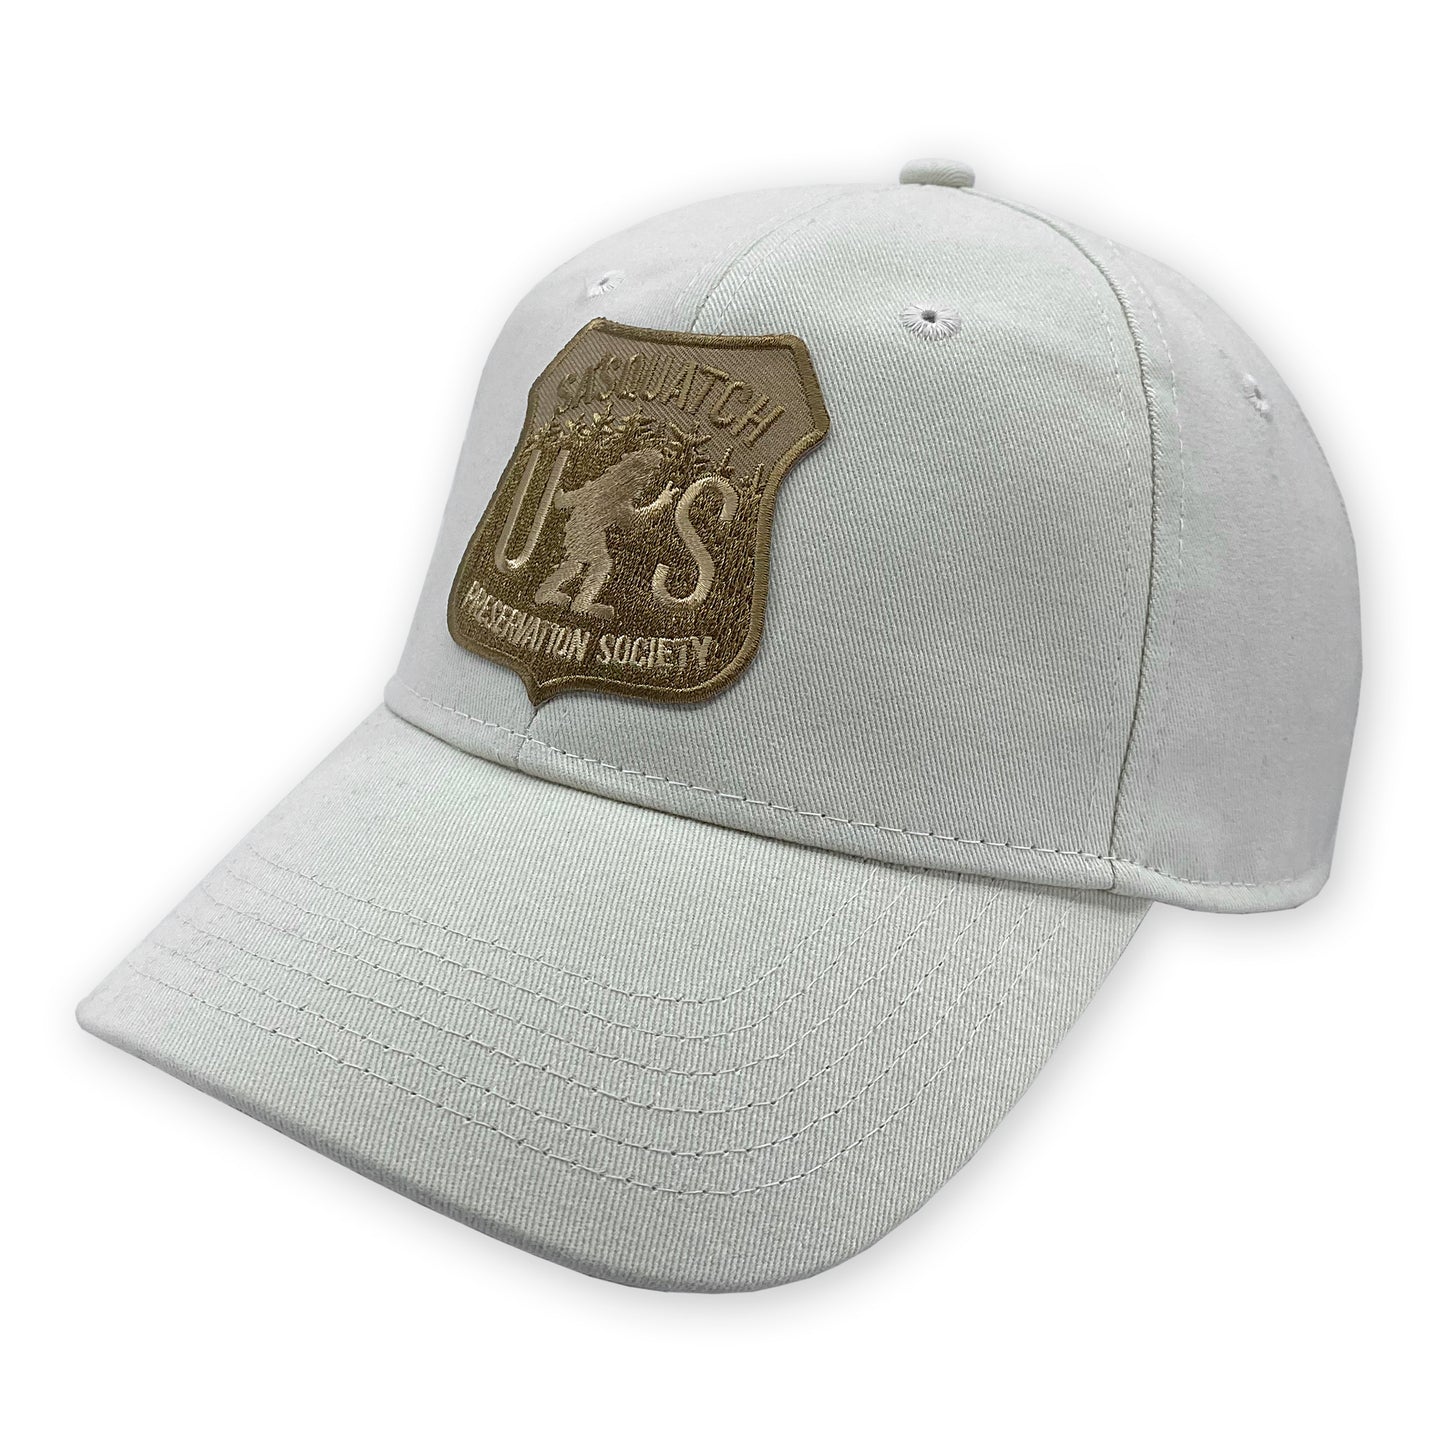 Sasquatch Preservation Society | Curved bill baseball hat